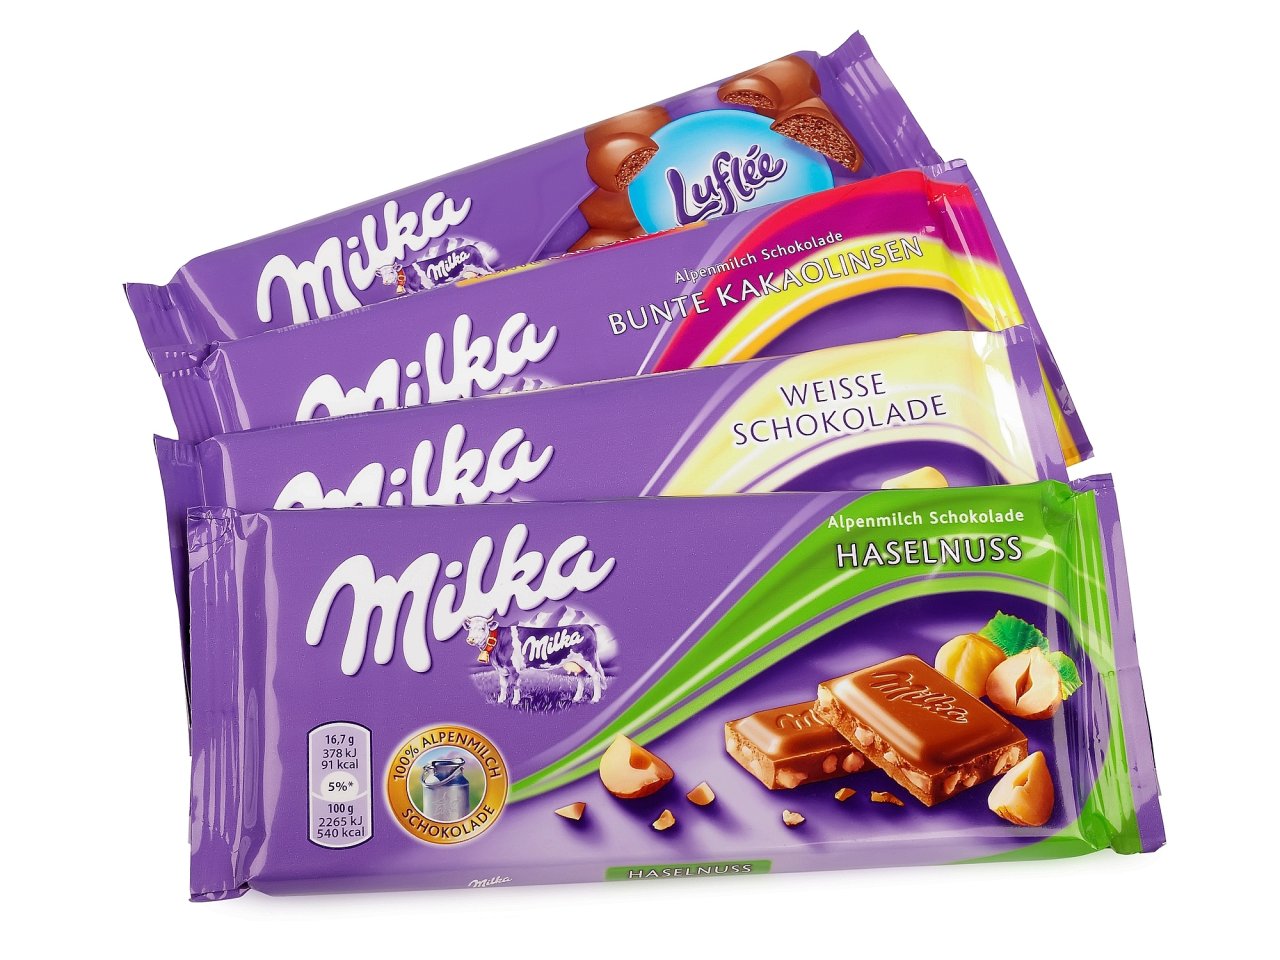 Milka: Immer weniger Schokolade pro Tafel